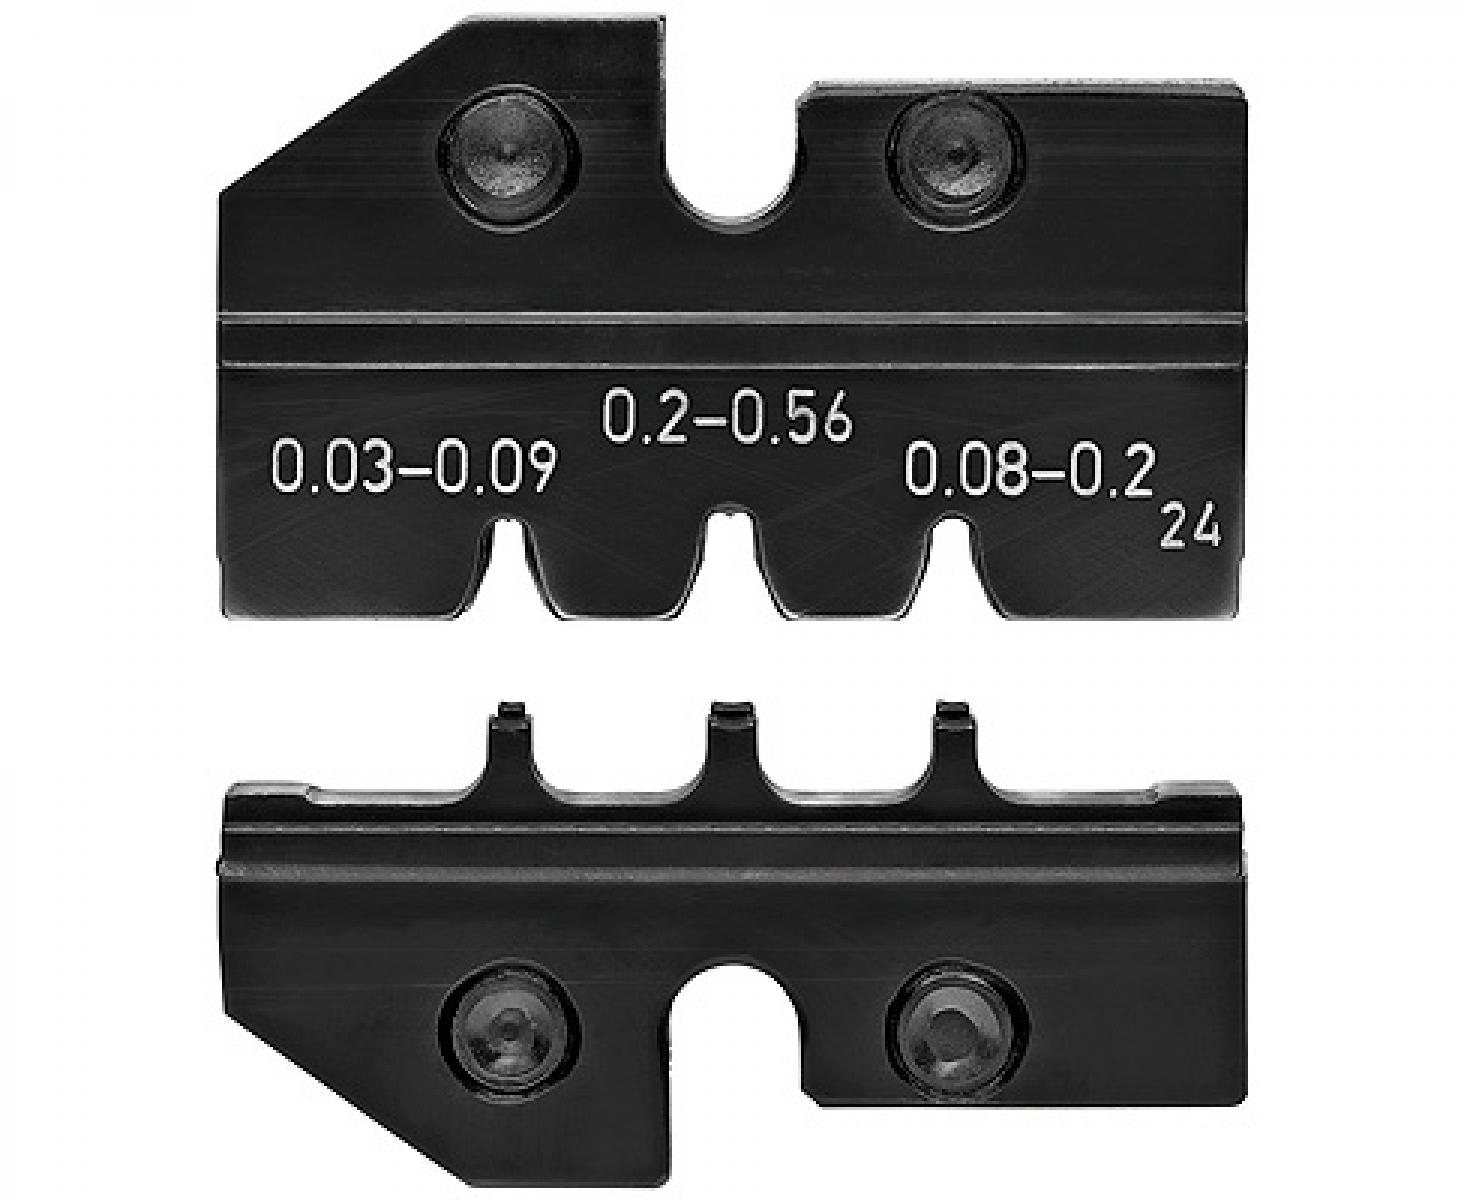 Плашка опрессовочная для штекера типа D-Sub Knipex KN-974924